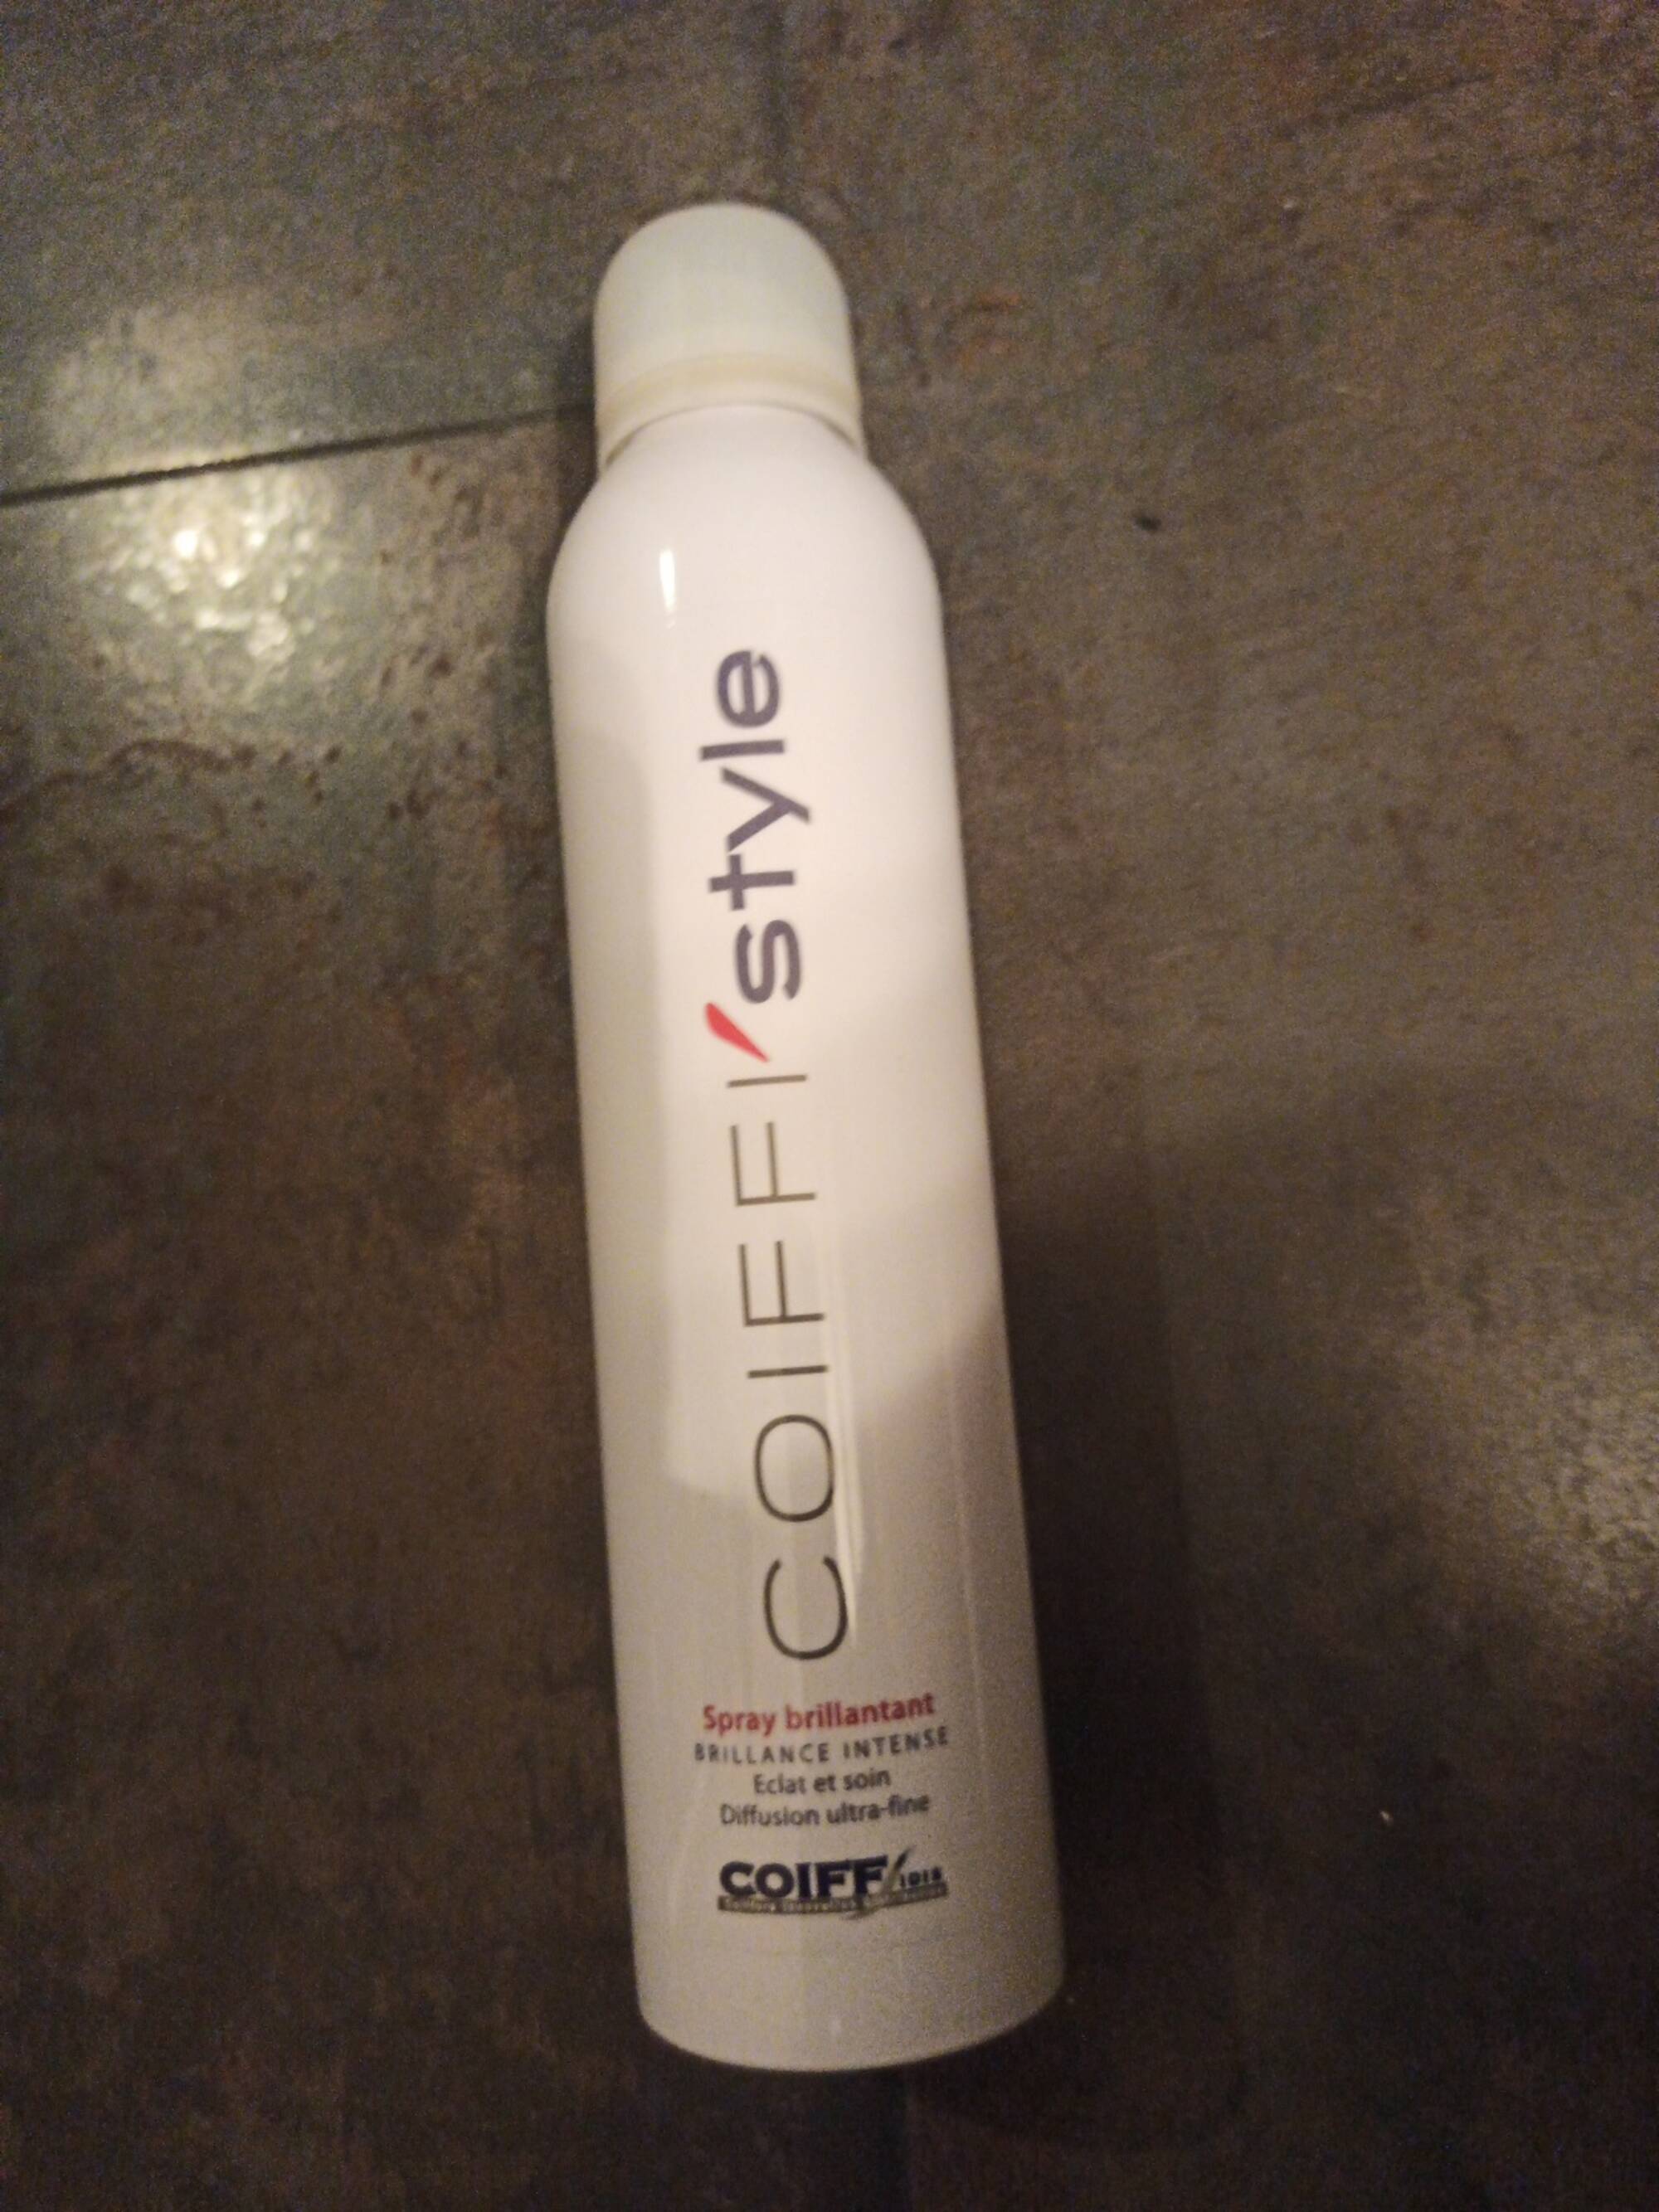 COIFF'IDIS - Coiffi'style - Spray brillantant